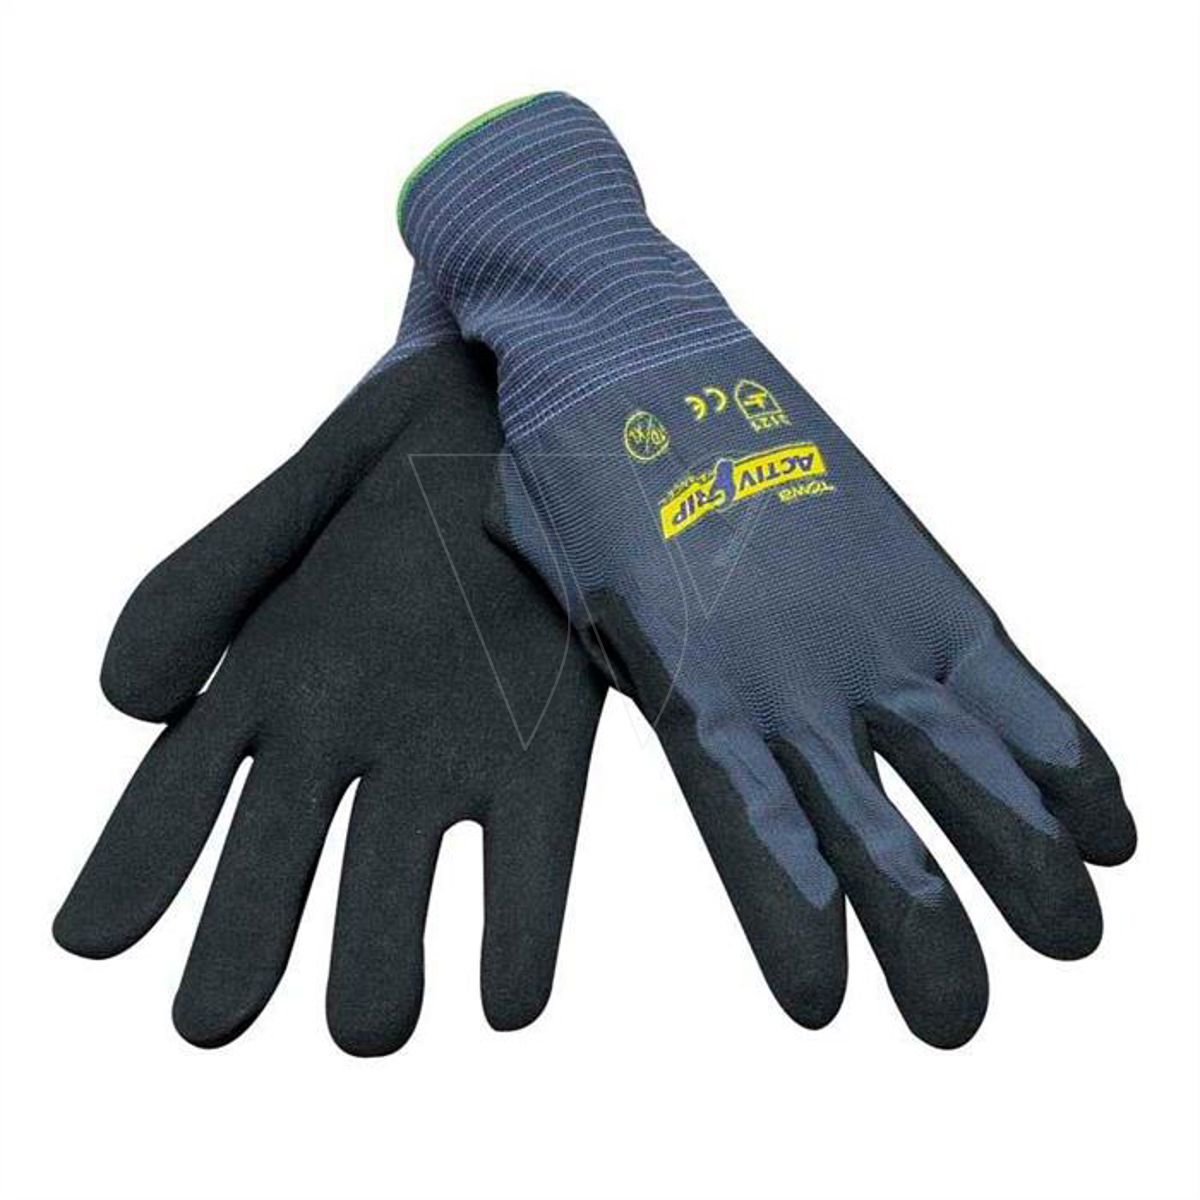 Oxon activgrip advance grip glove